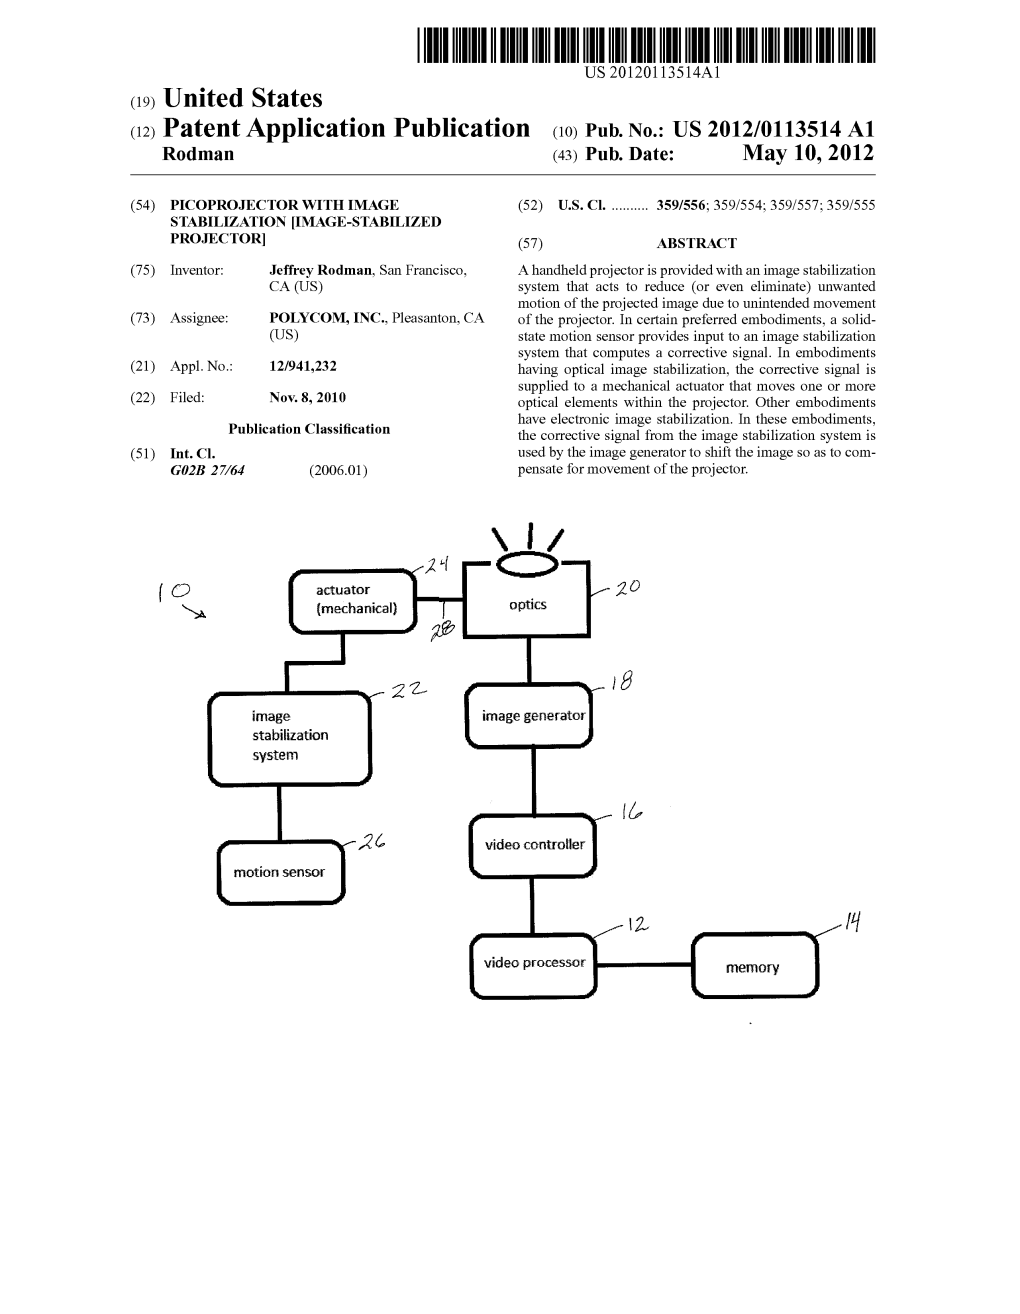 (12) Patent Application Publication (10) Pub. No.: US 2012/0113514 A1 Rodman (43) Pub